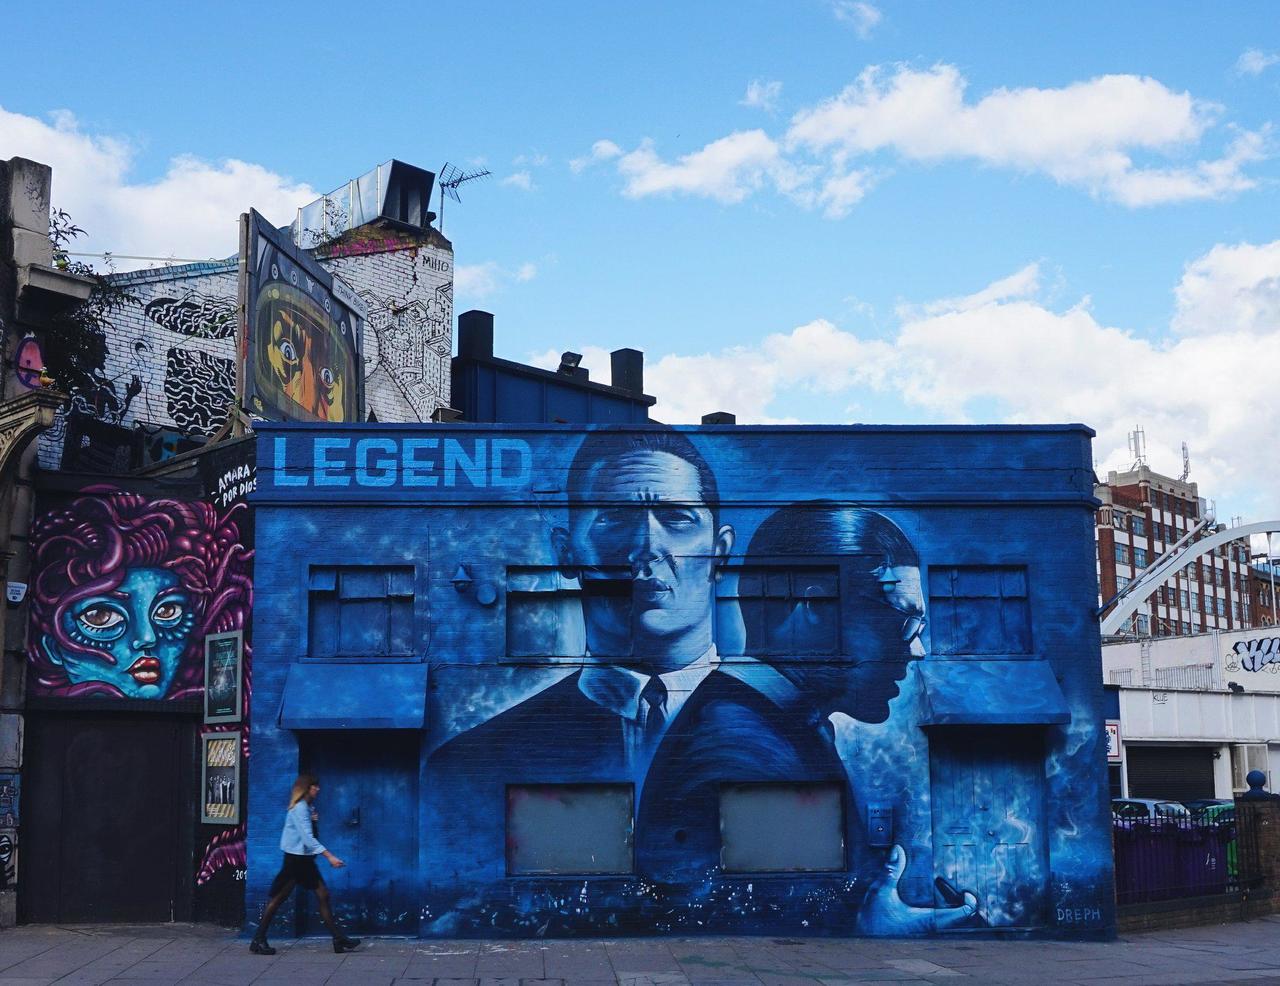 RT @spectrum12345: When People Match Places #London #lovelondon #Londonislovinit #streetart #Shoreditch #graffiti  #streetphotography http://t.co/jMYLA1LaJl